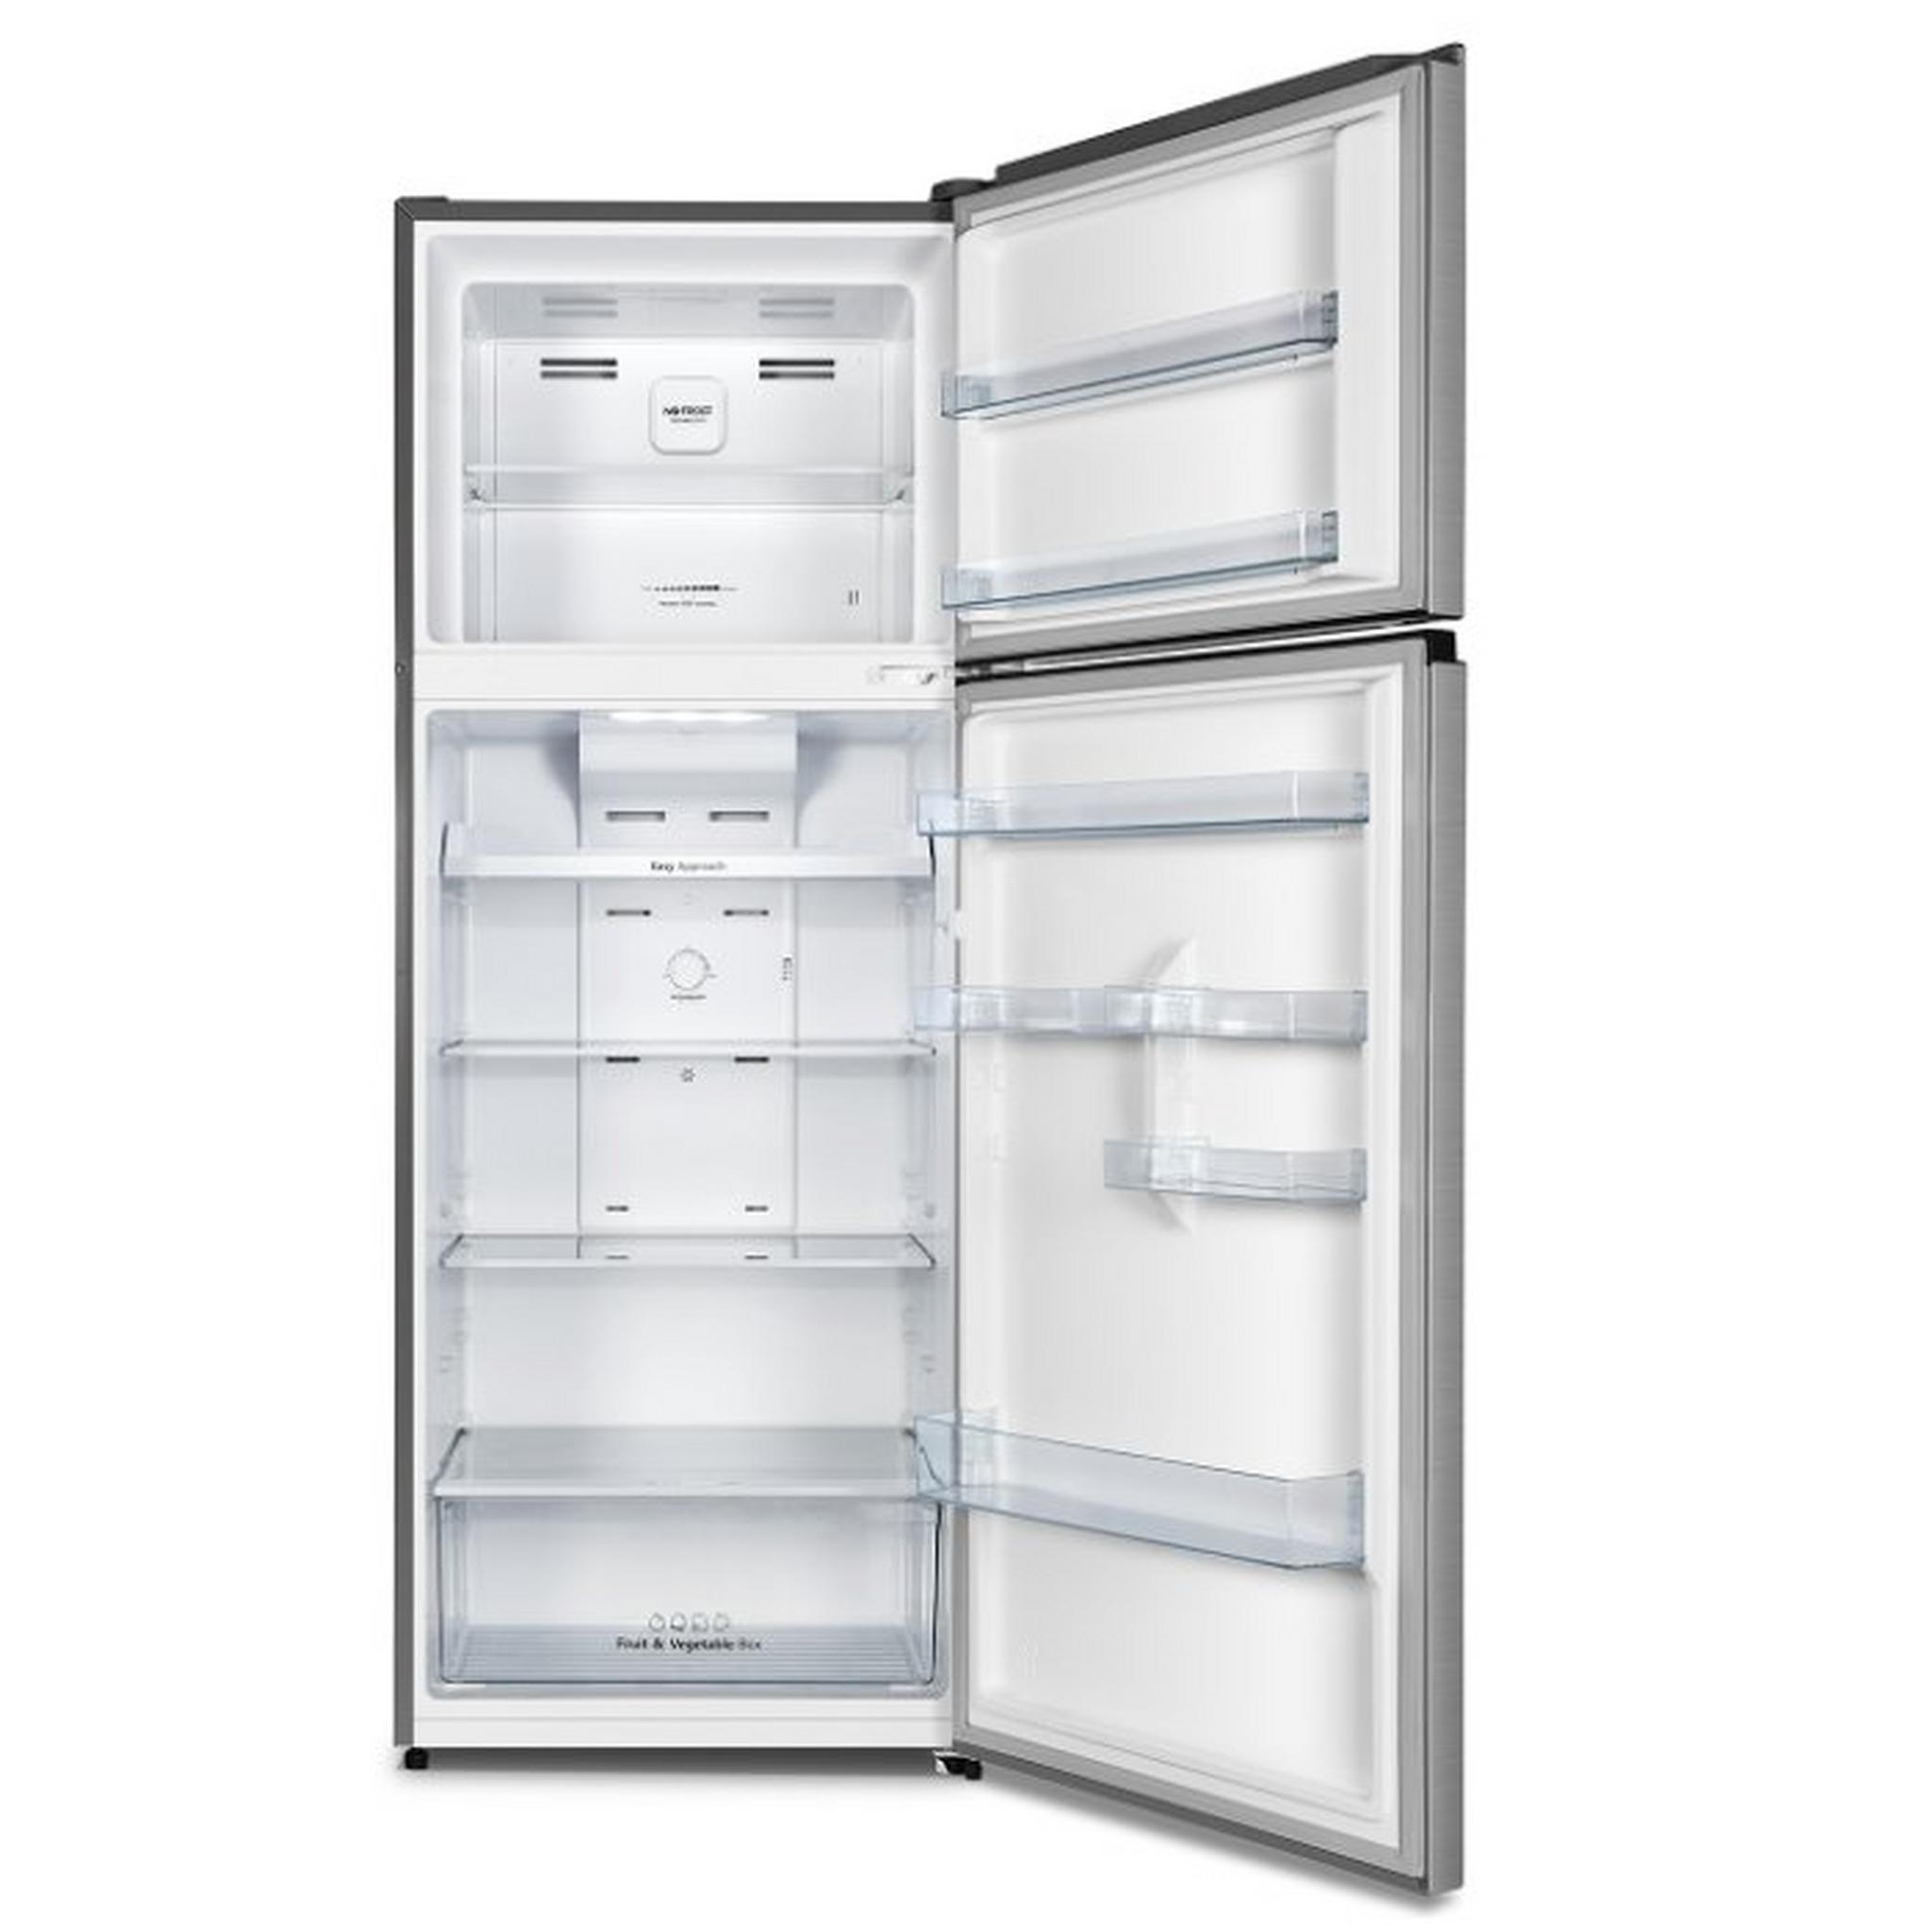 Hisense Top Freezer Refrigerator, 21 CFT, 599 Liters, RT599N4ASU - Inox